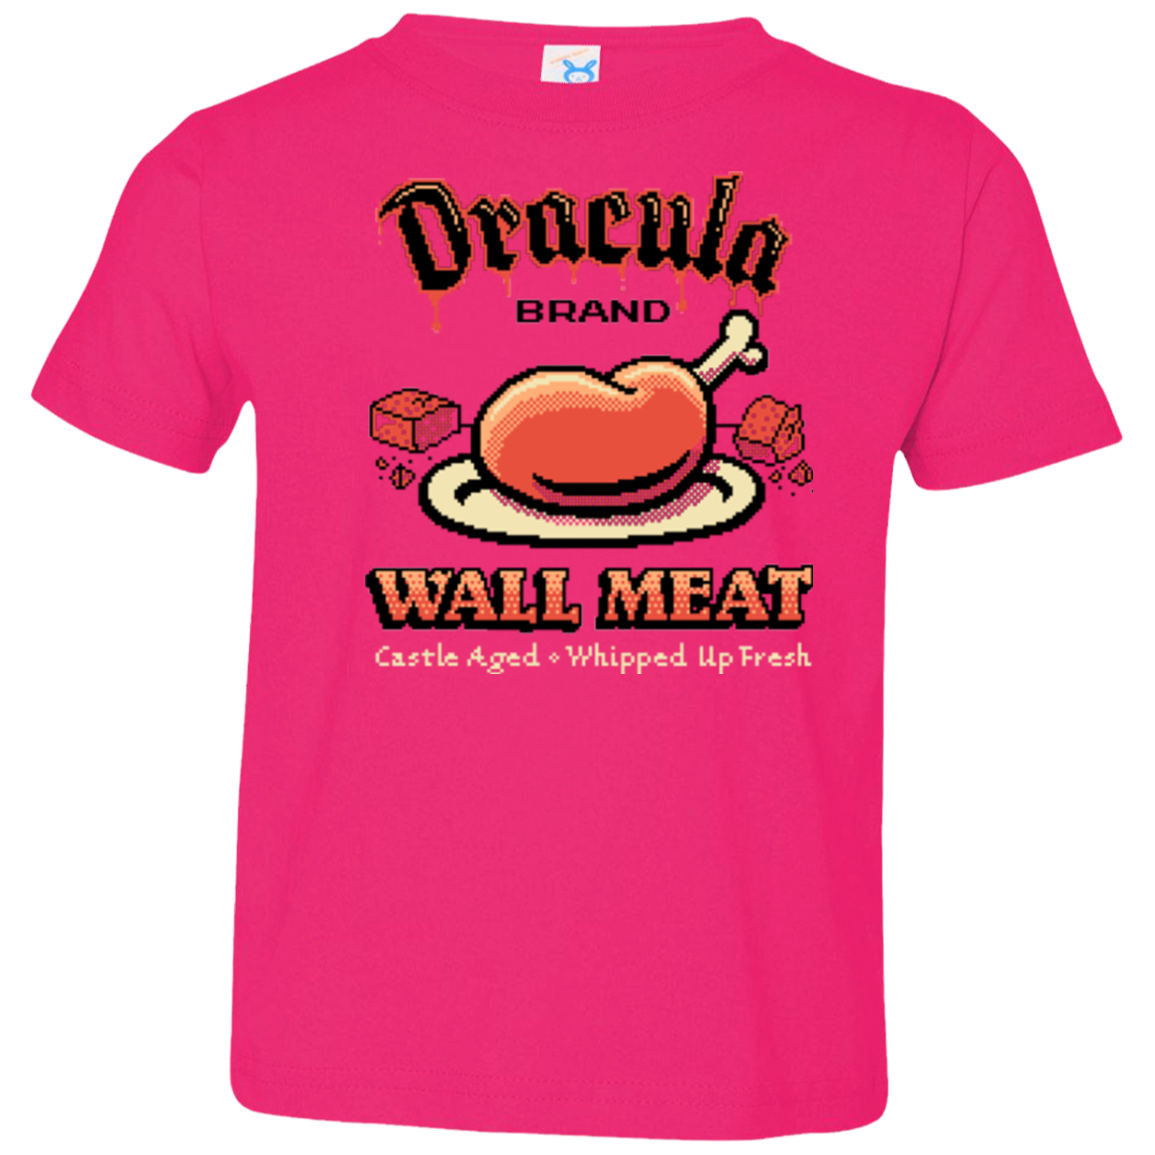 Wall Meat Toddler Premium T-Shirt